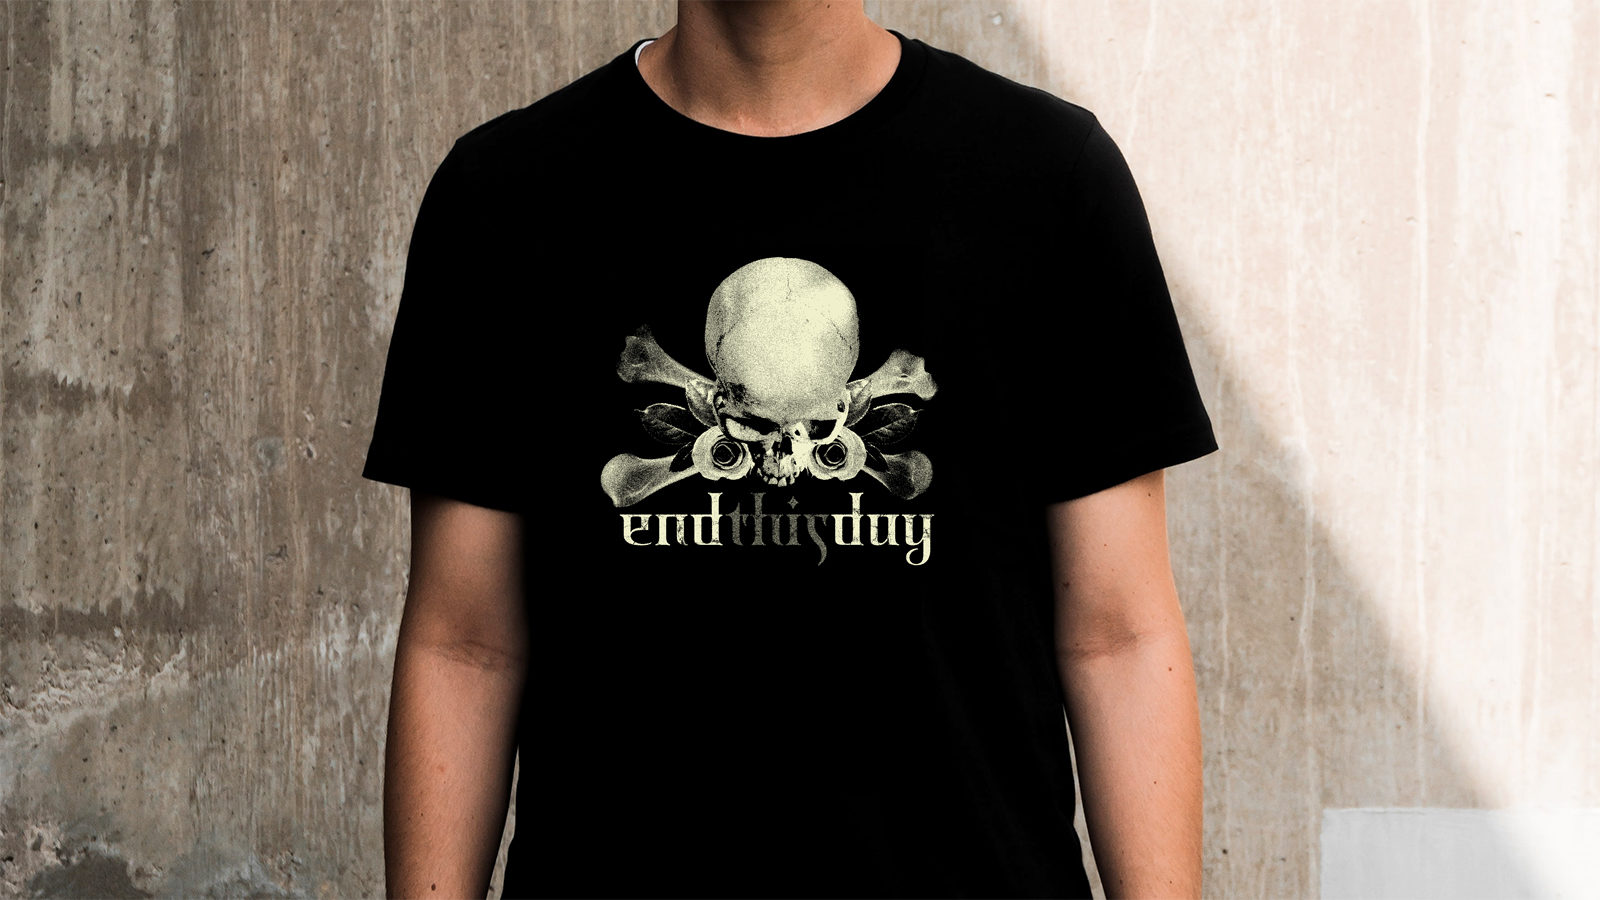 Endthisday – Tee Shirt